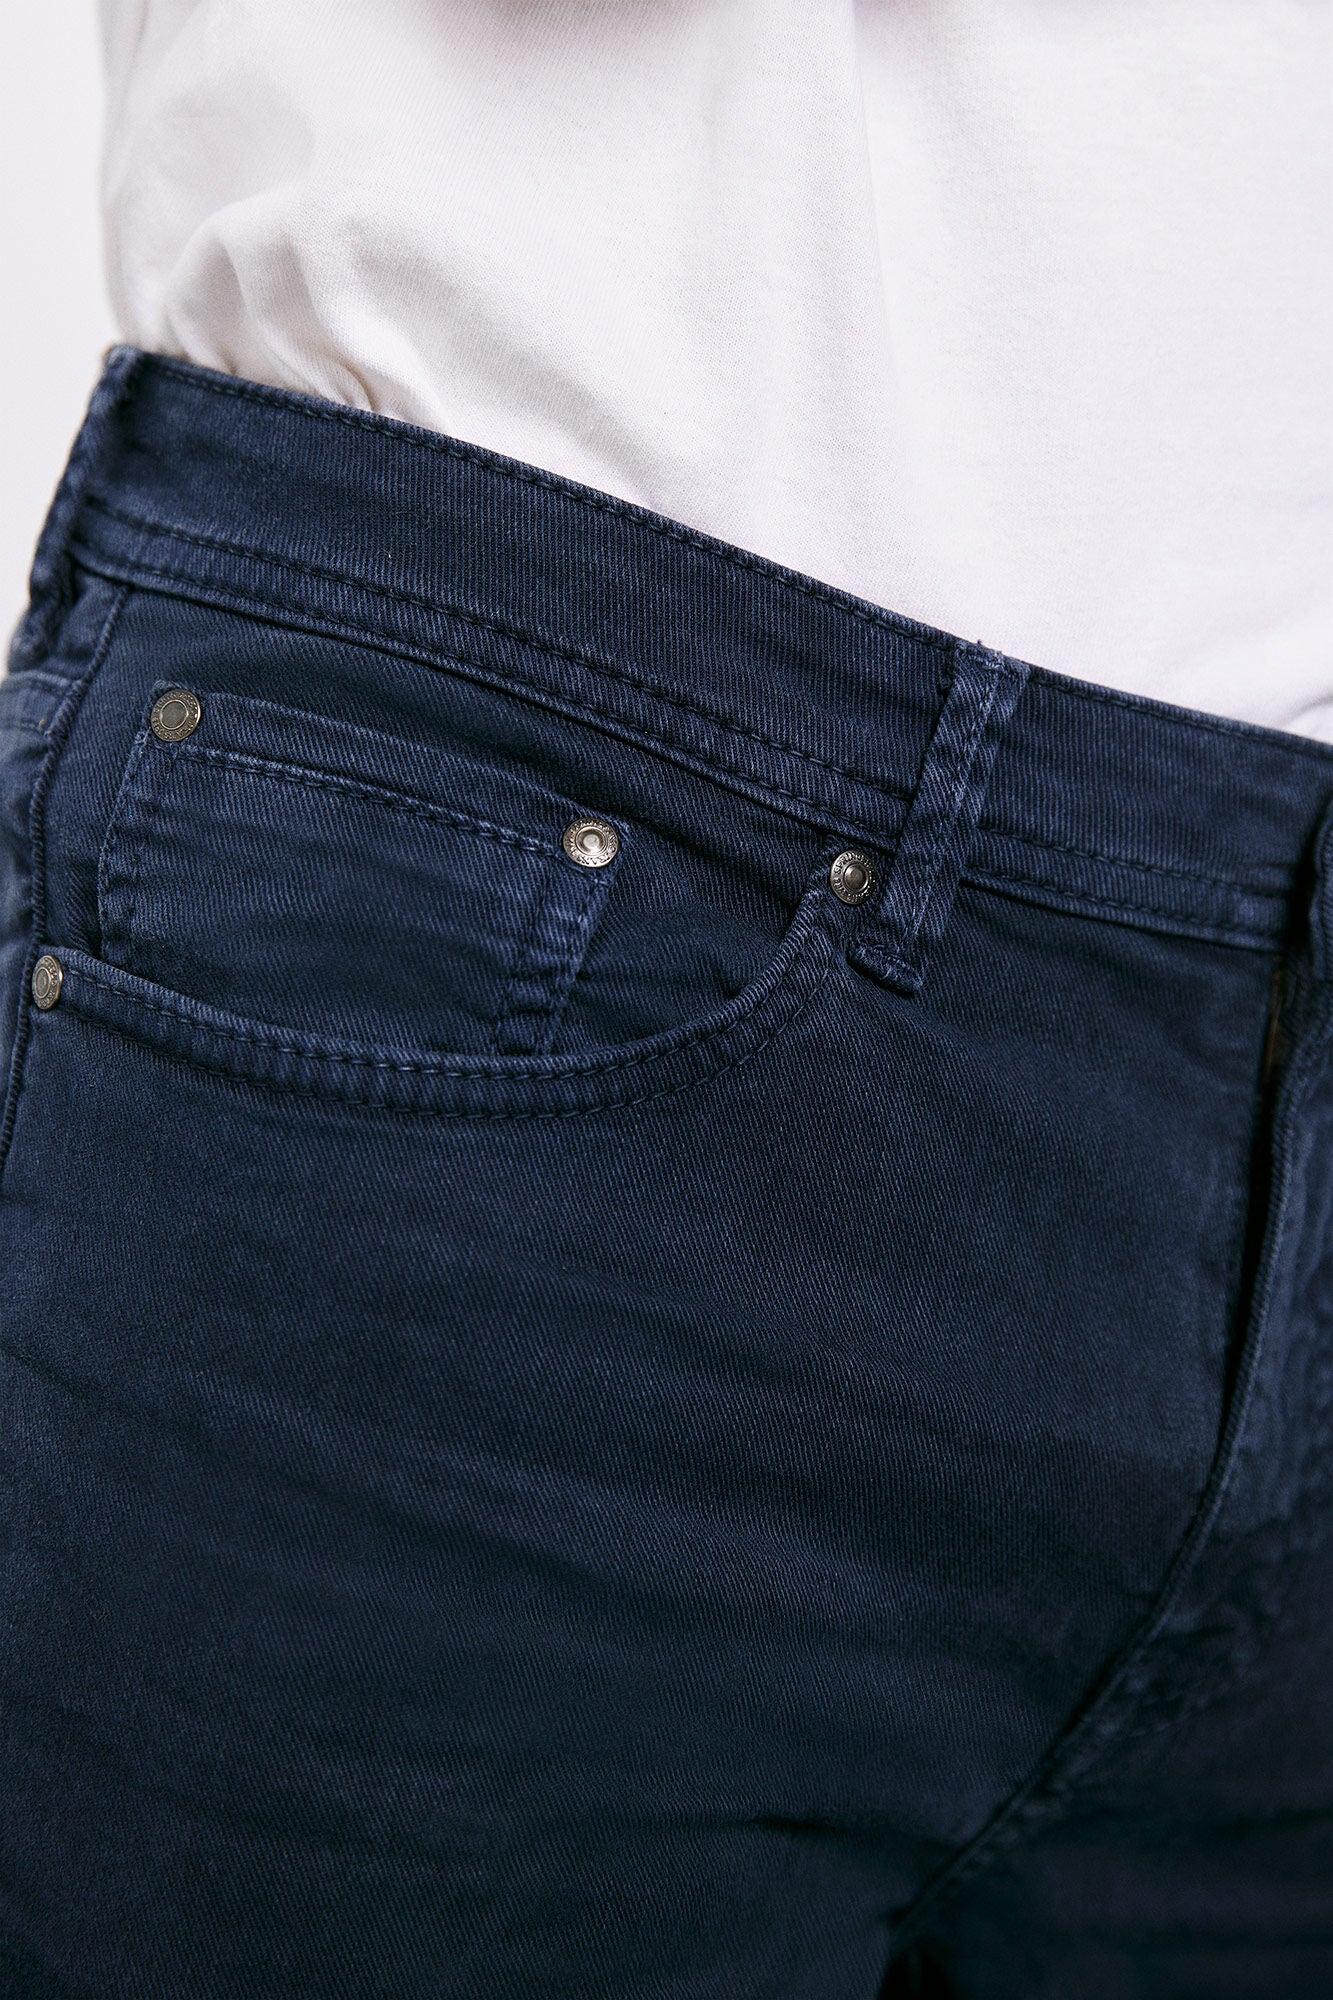 Dark Blue Cotton Sport Trouser with 5 pockets